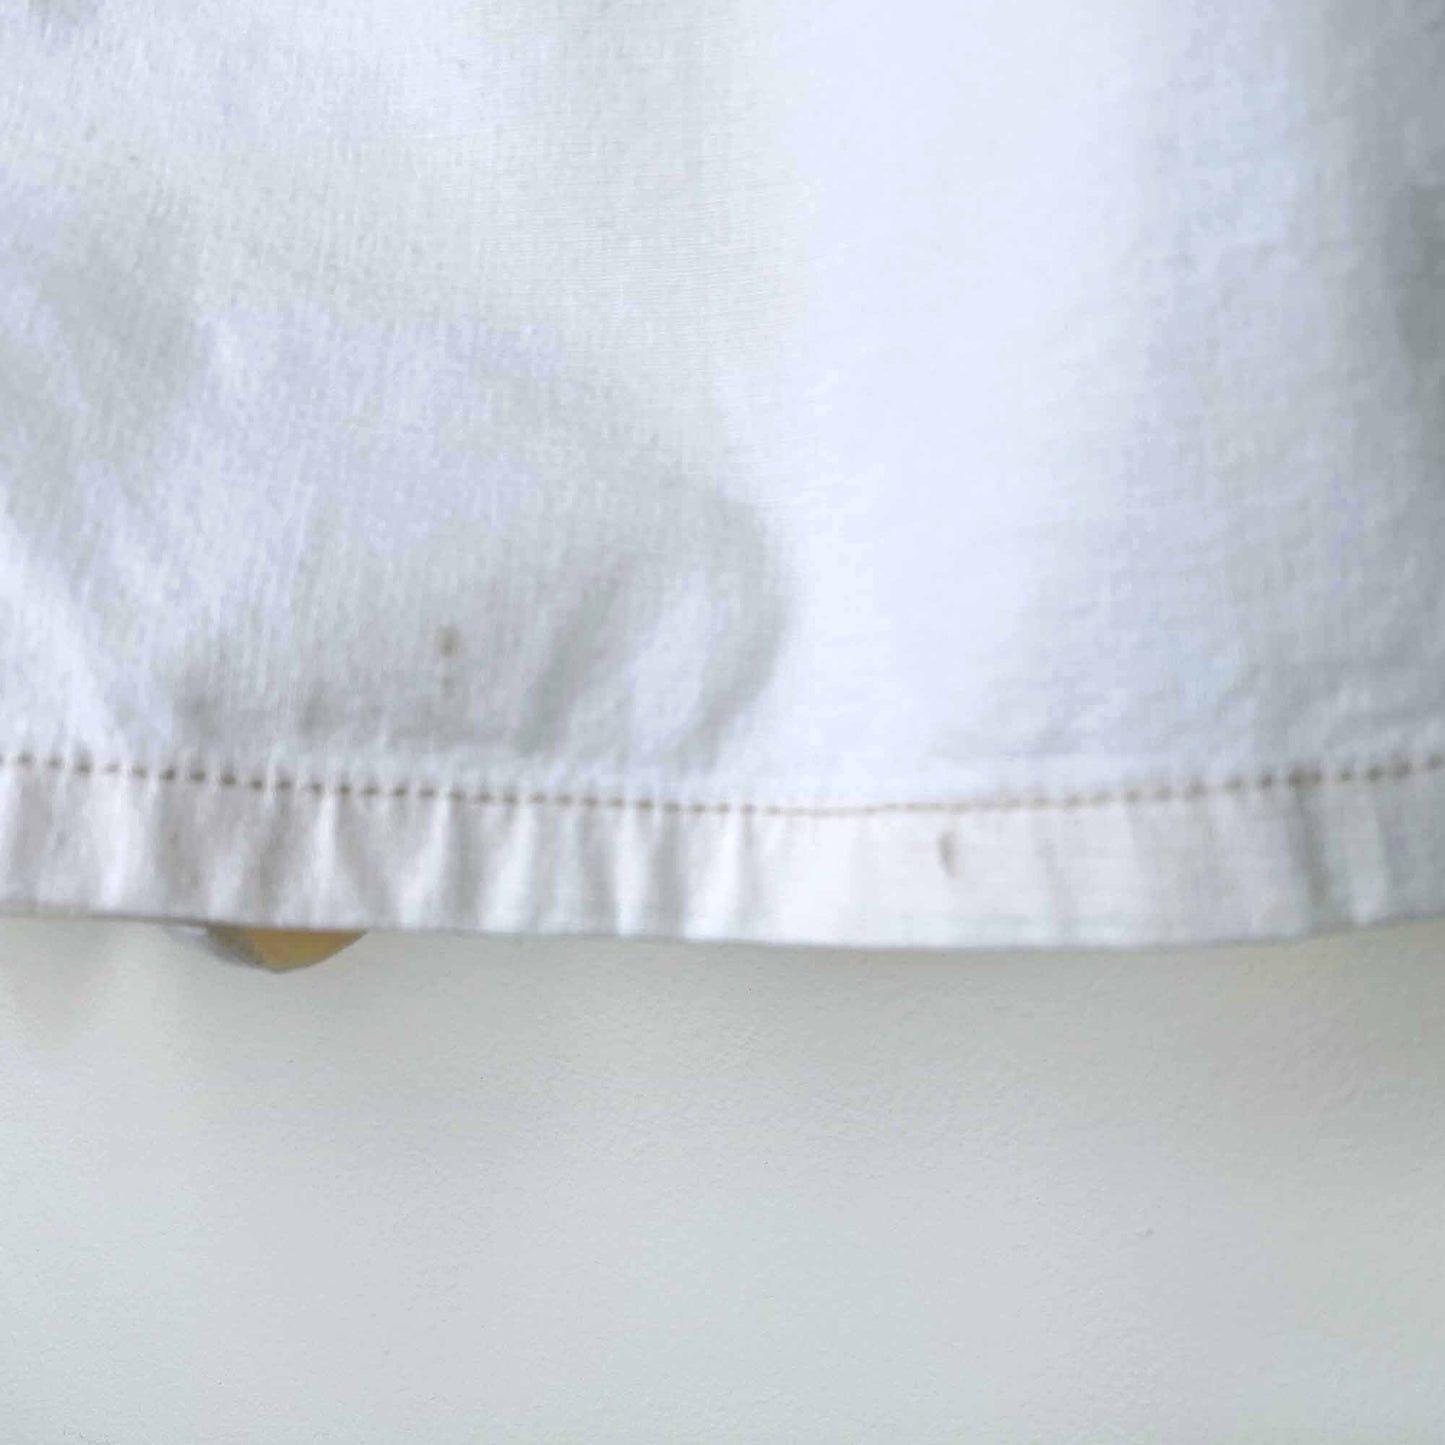 yishion cotton high rise every day shorts - size large